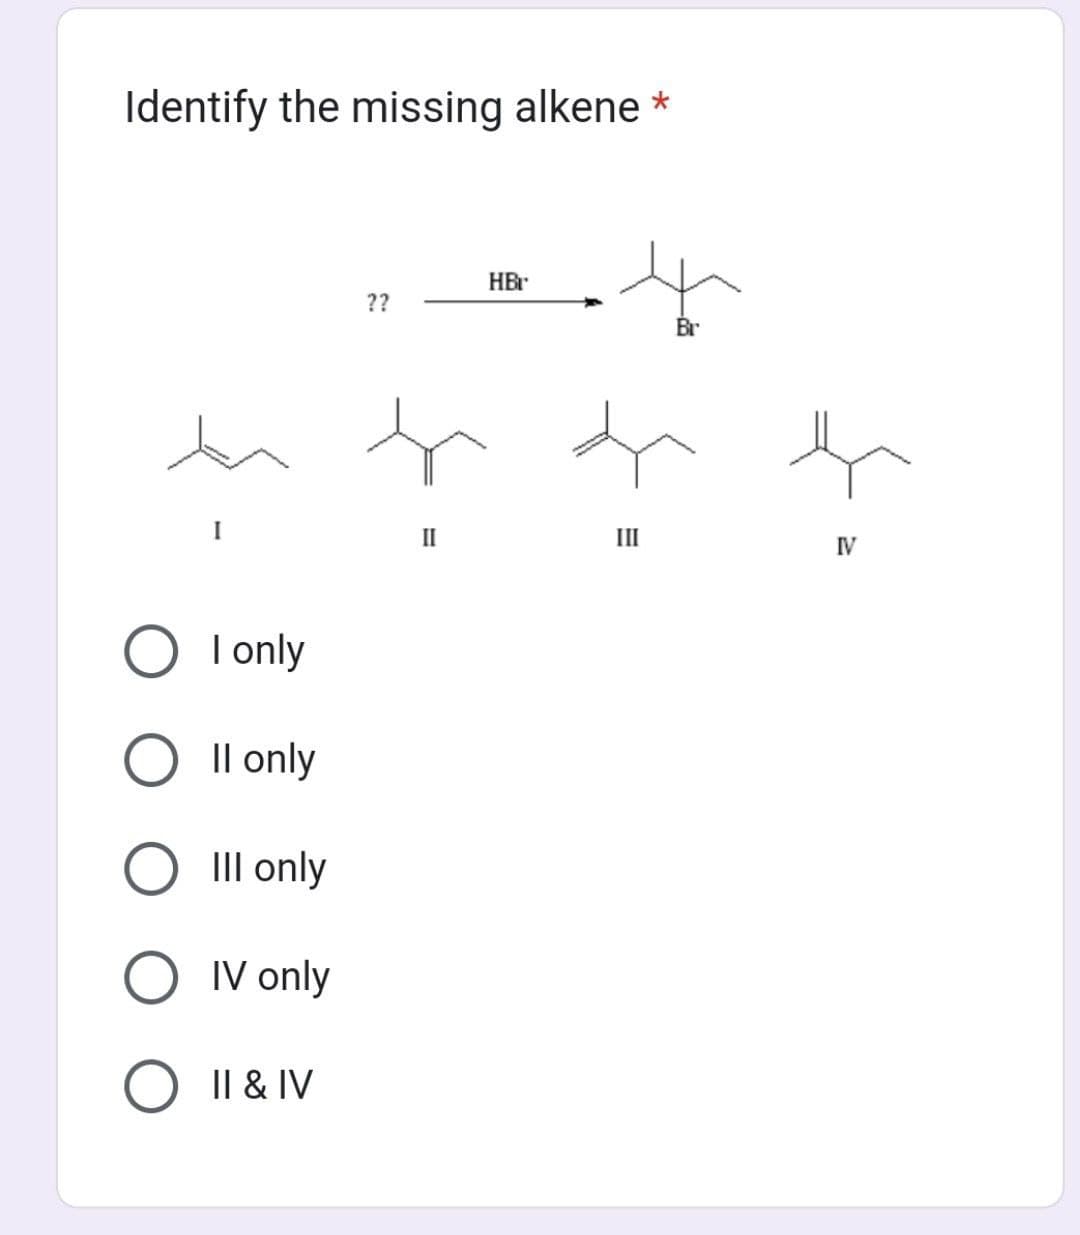 Identify the missing alkene *
O I only
O II only
III only
OIV only
O II & IV
??
II
HBr
E
III
Br
IV